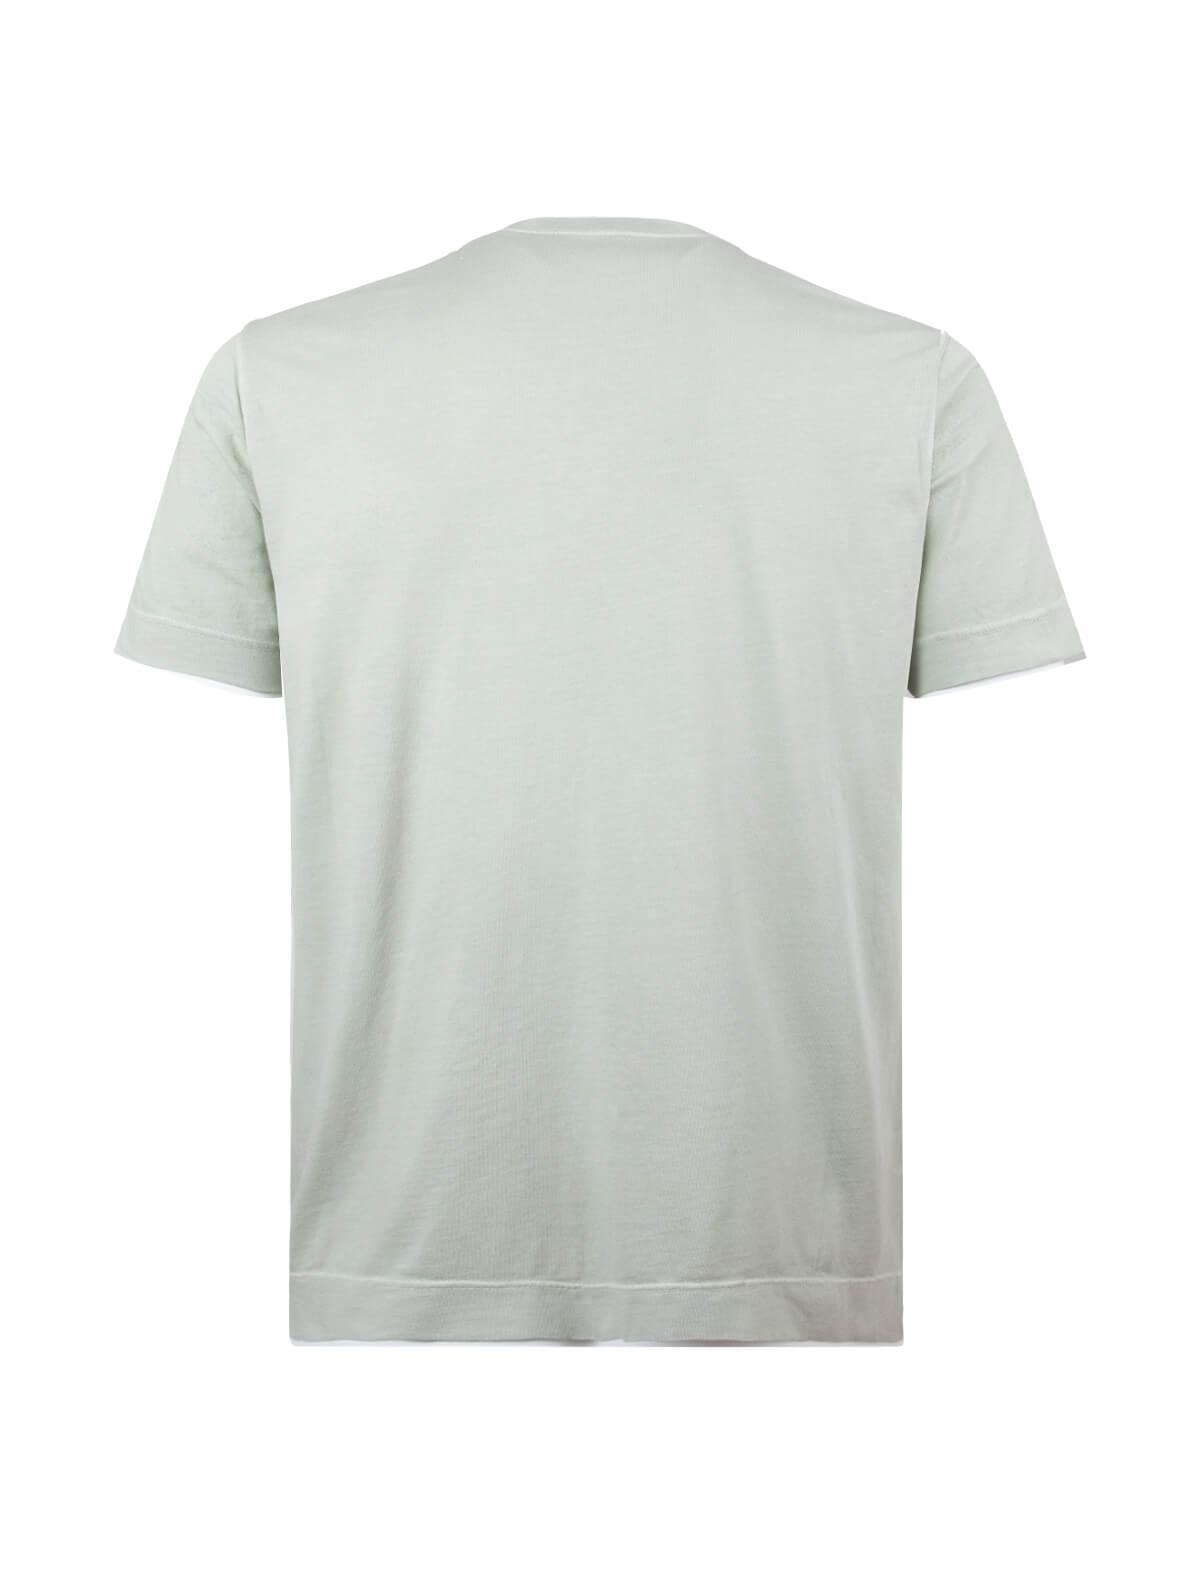 CIRCOLO 1901 Crew Neck Cotton T-Shirt in Pale Green | CLOSET Singapore